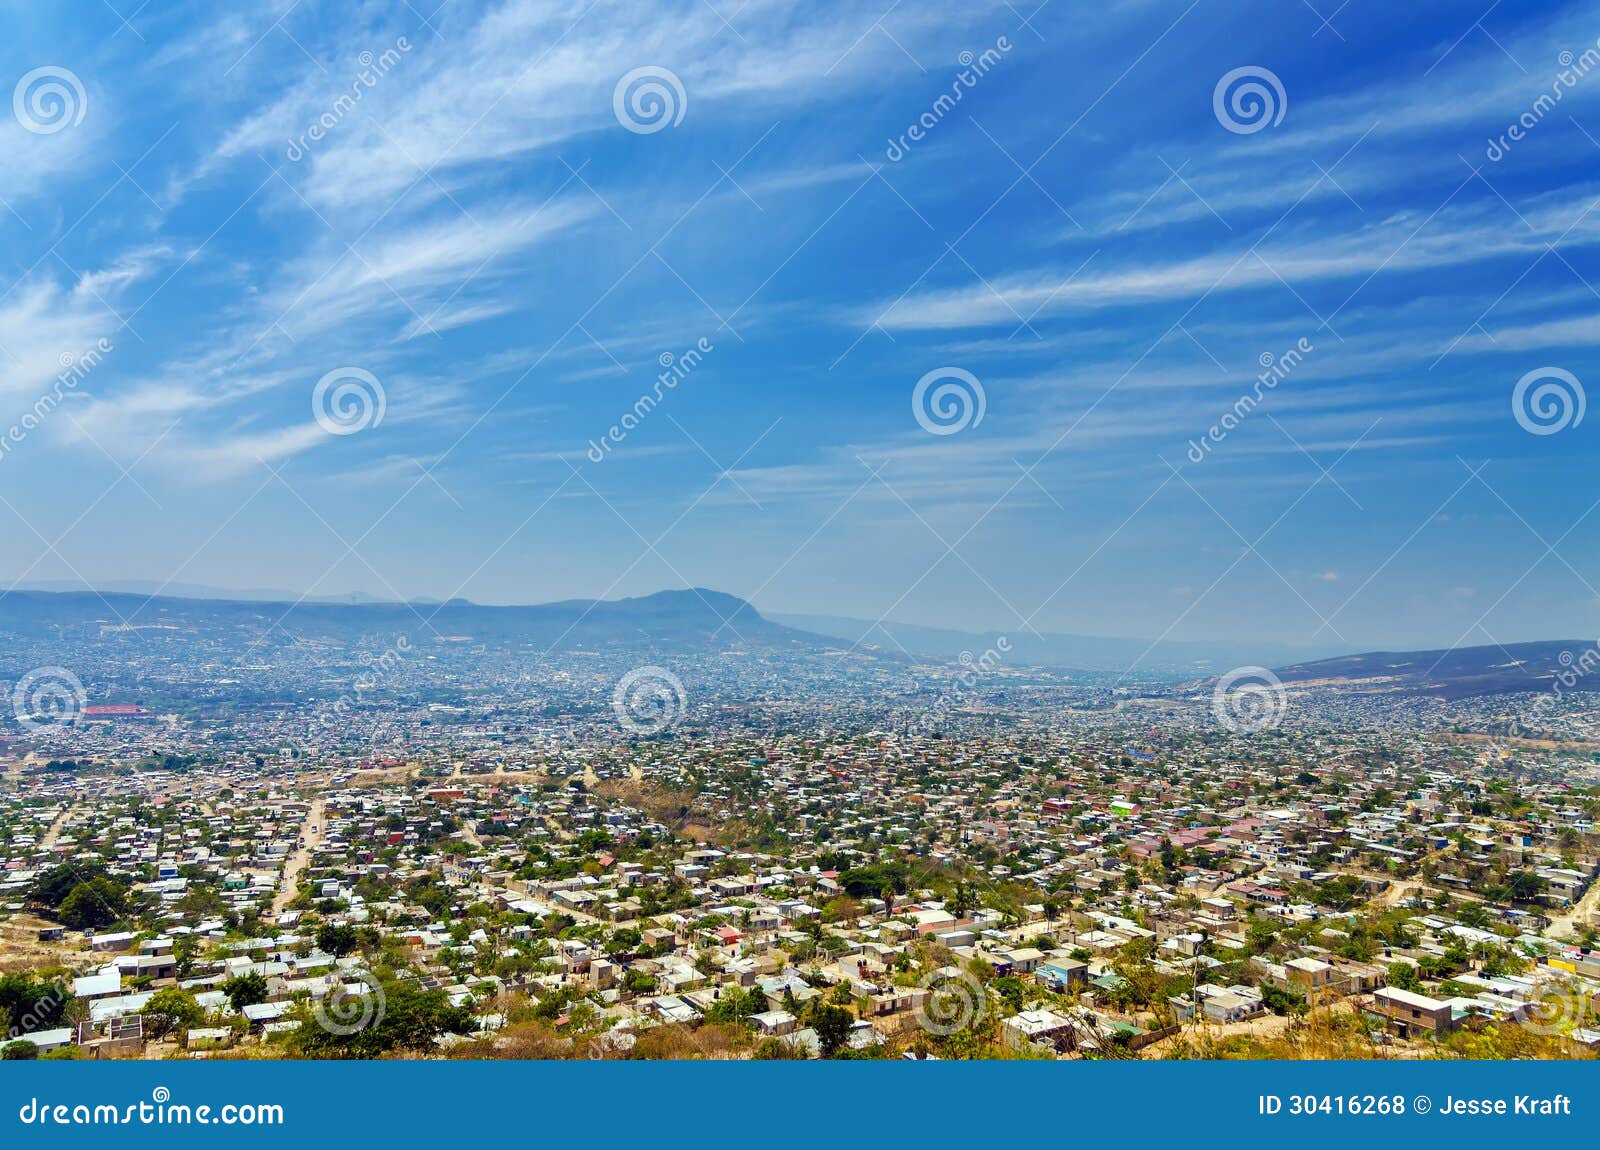 cityscape of tuxtla, chiapas